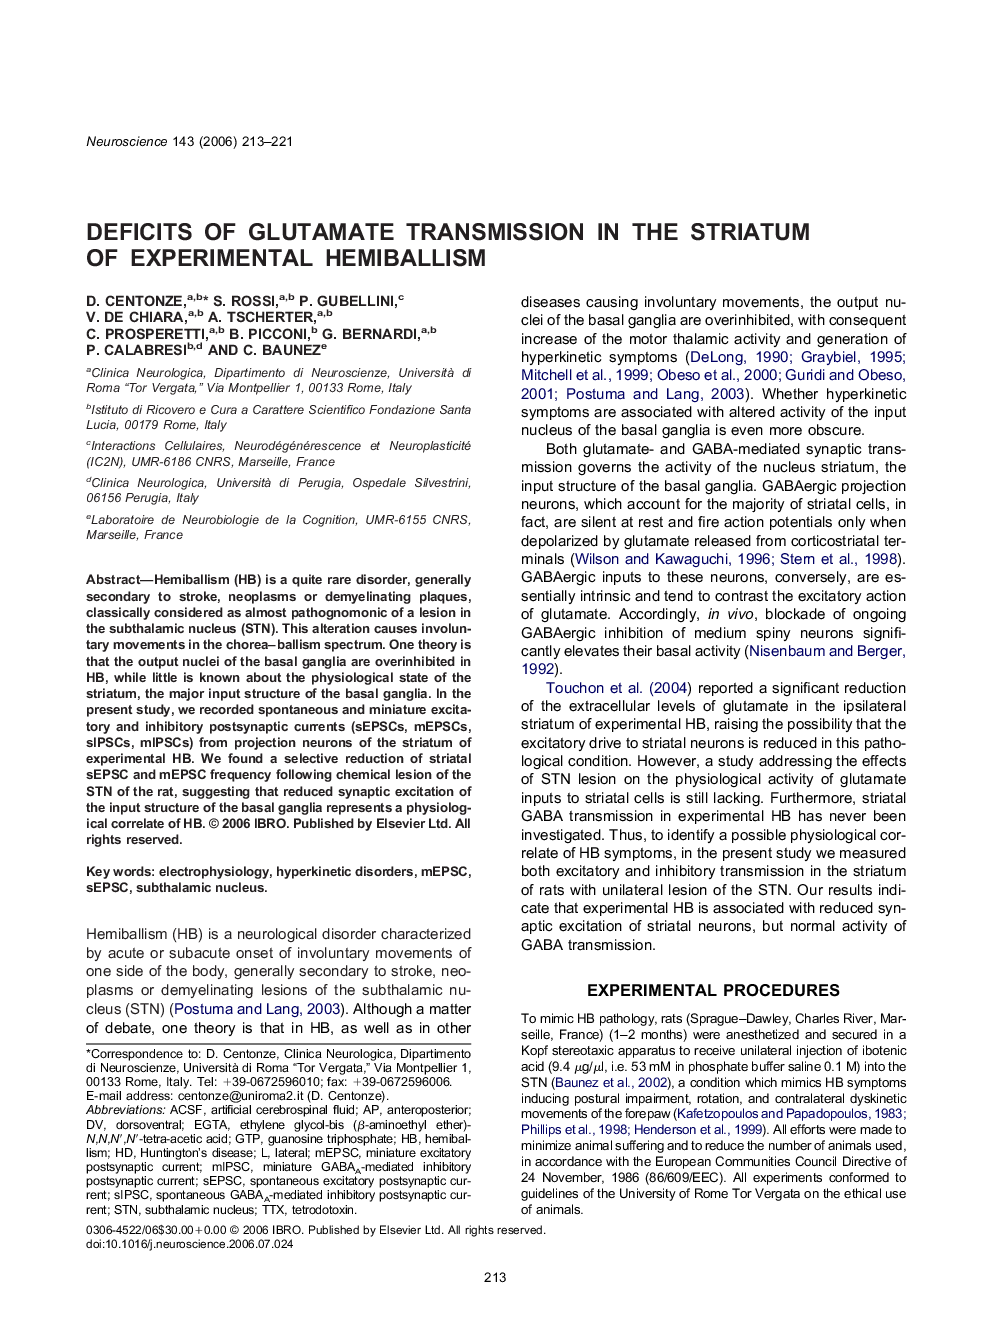 Deficits of glutamate transmission in the striatum of experimental hemiballism